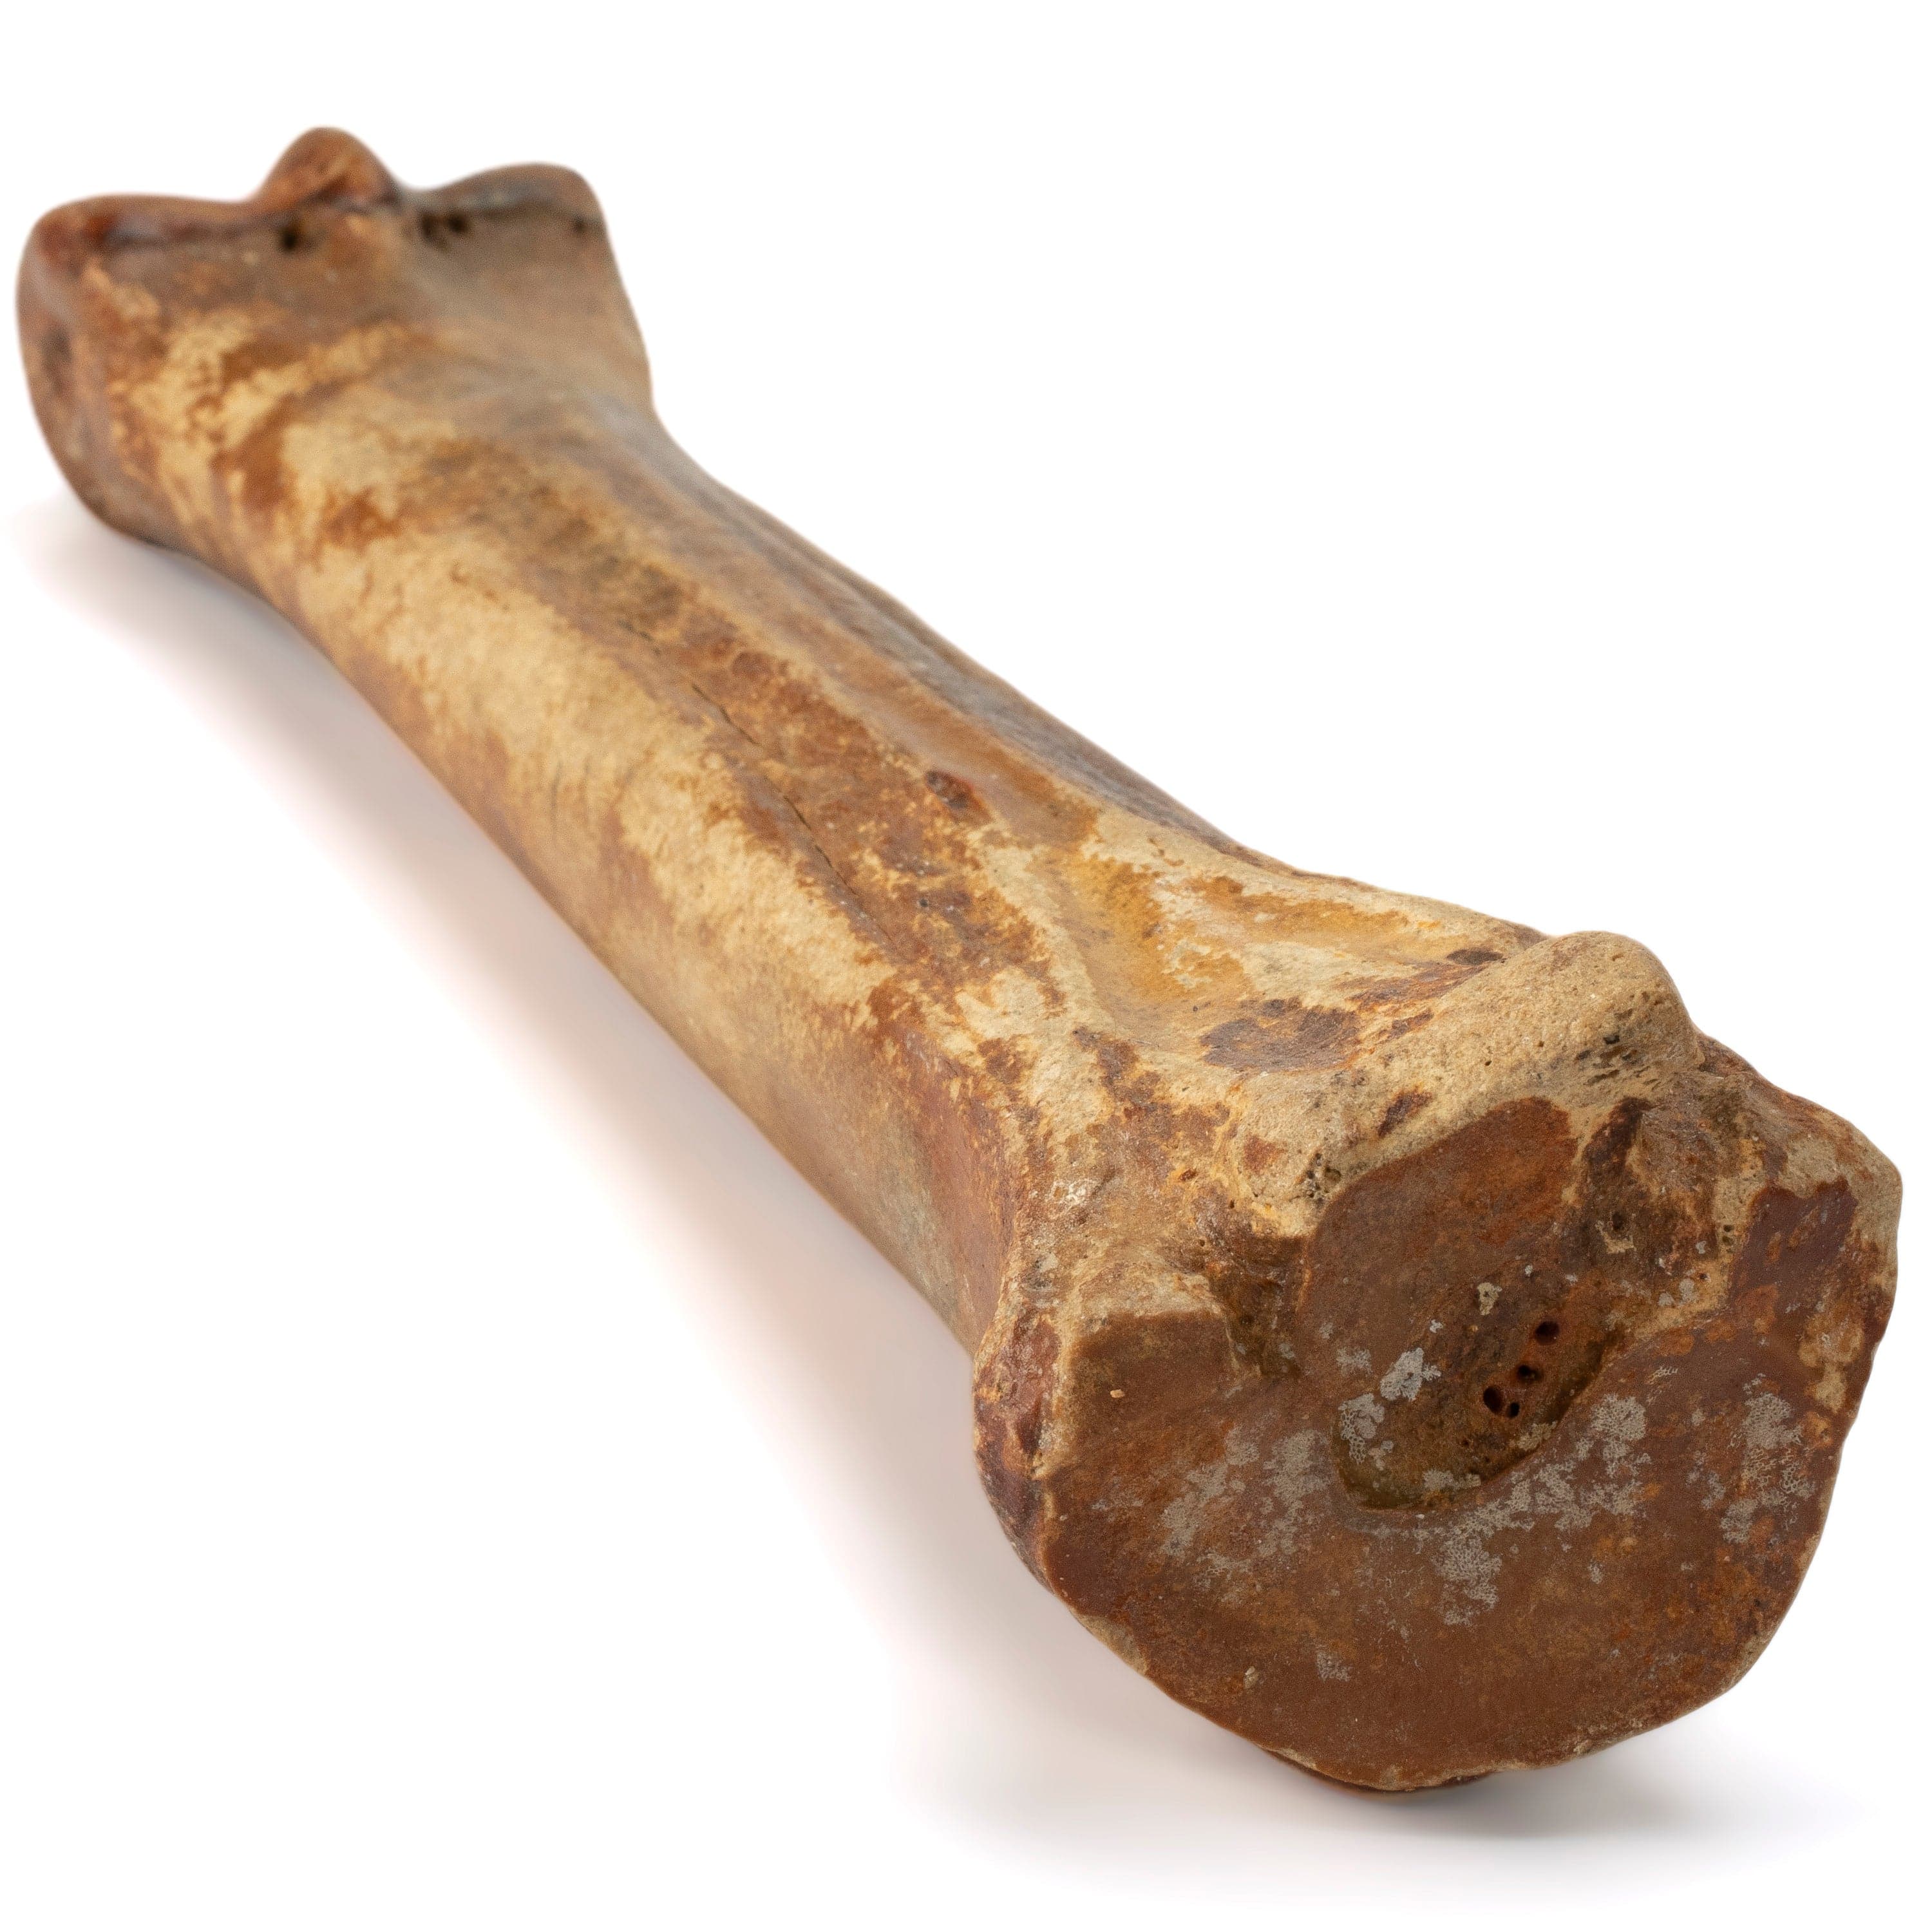 Kalifano Fossils & Minerals Authentic Horse Leg Bone Fossil DB400-HB